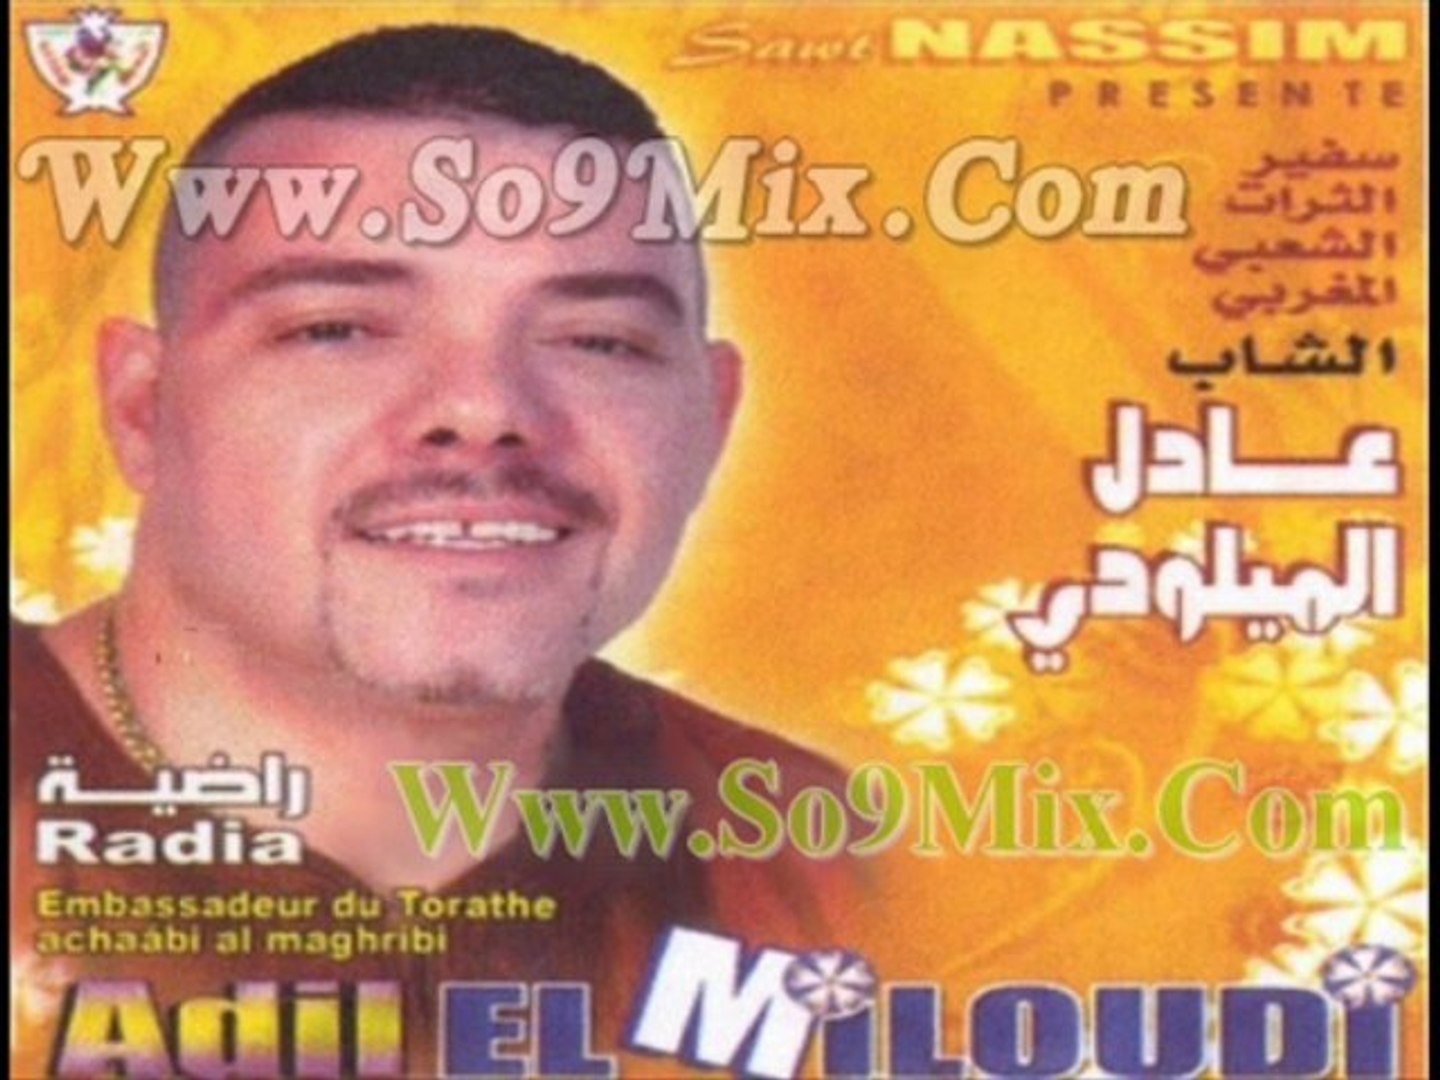 Adil El Miloudi 2010 - Radia - Vidéo Dailymotion